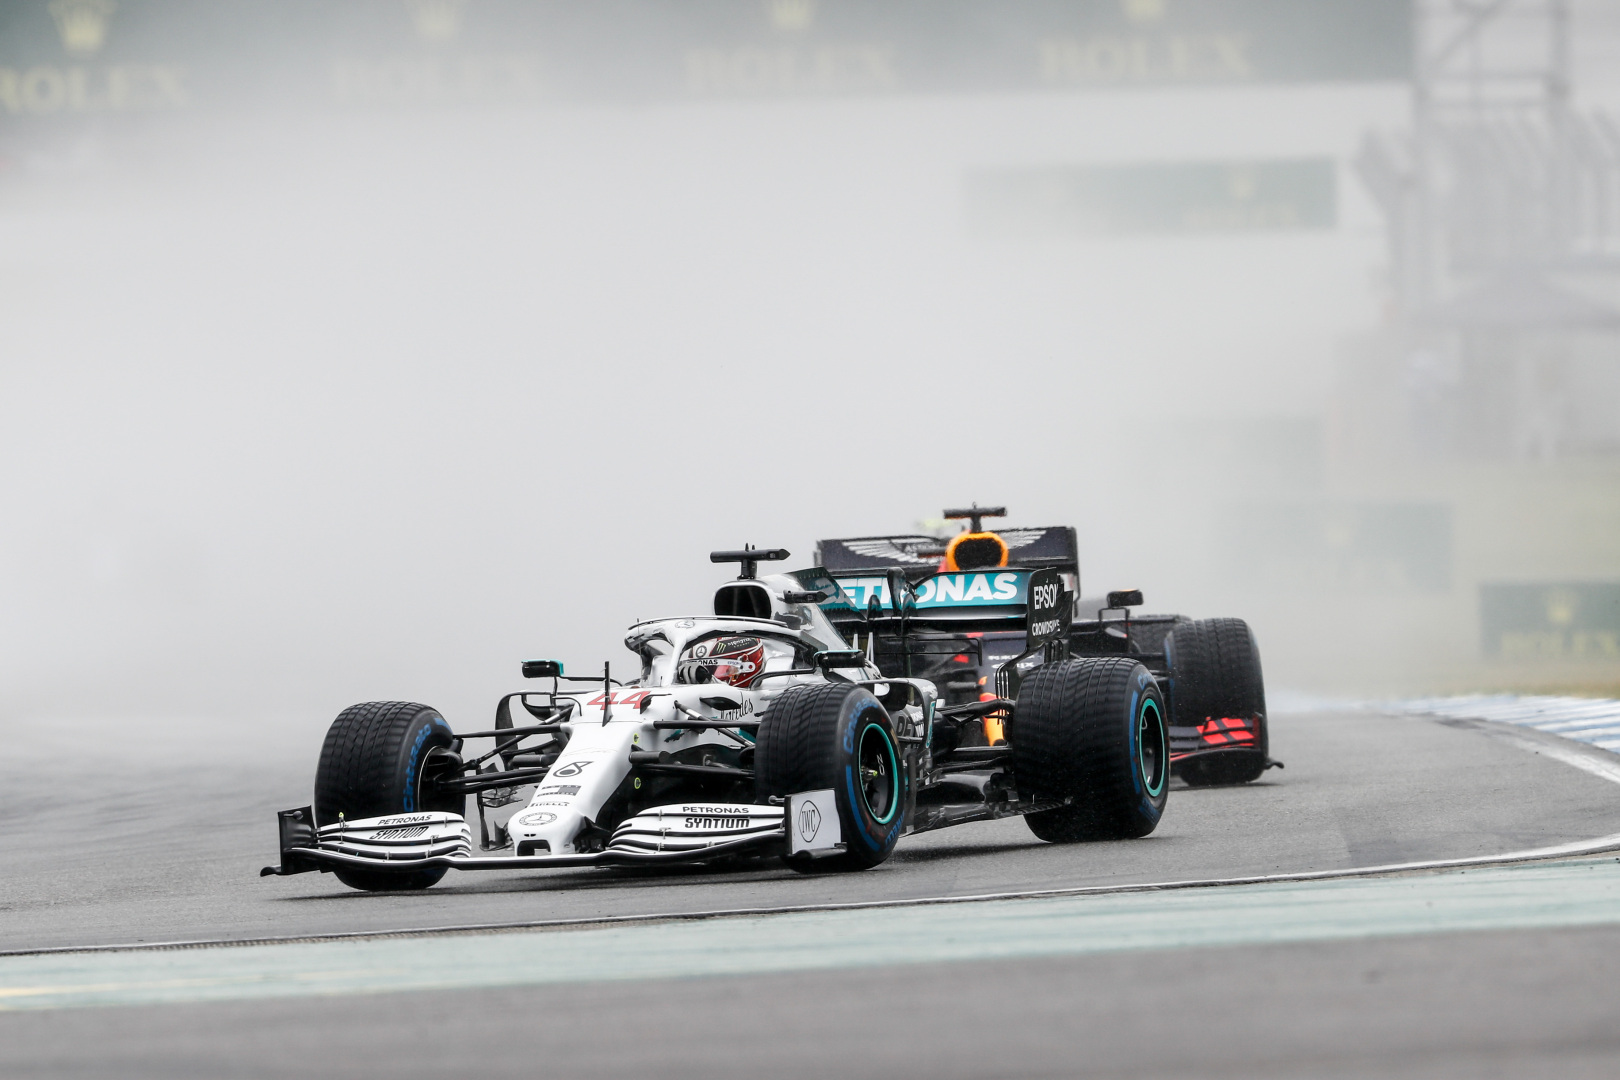 2019 German Grand Prix, Sunday – LAT Images